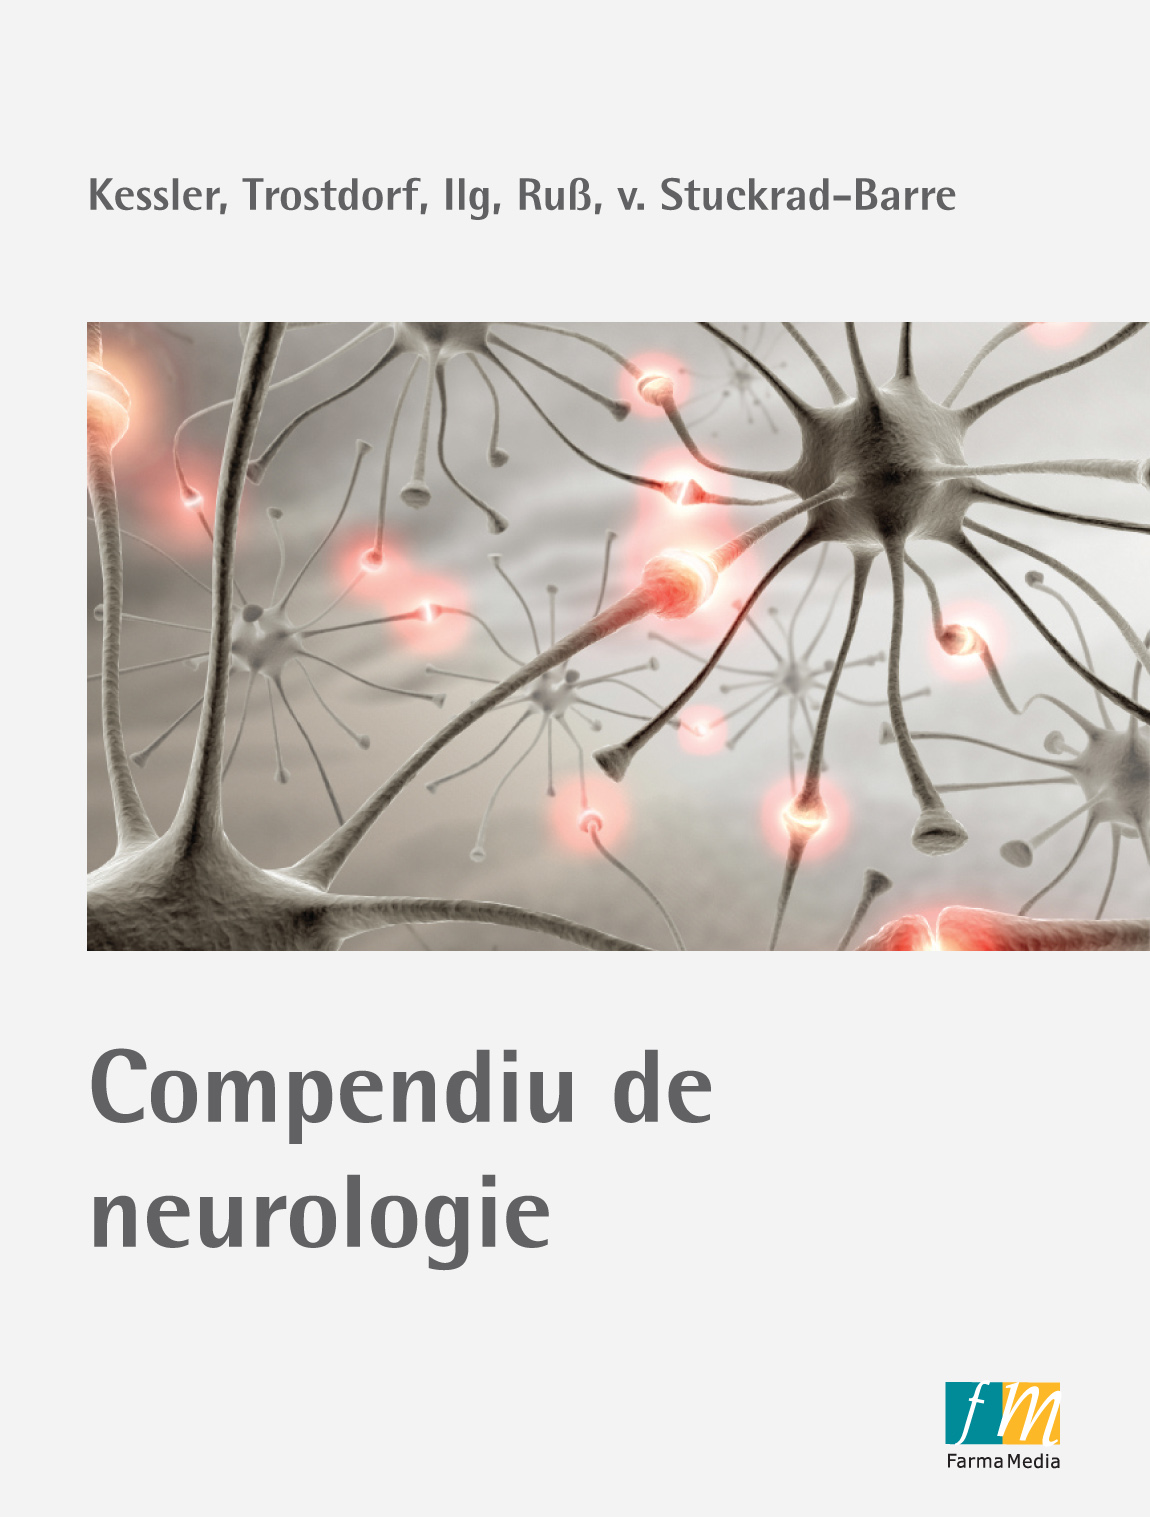 Compendiu de neurologie - Kessler, Trostdorf